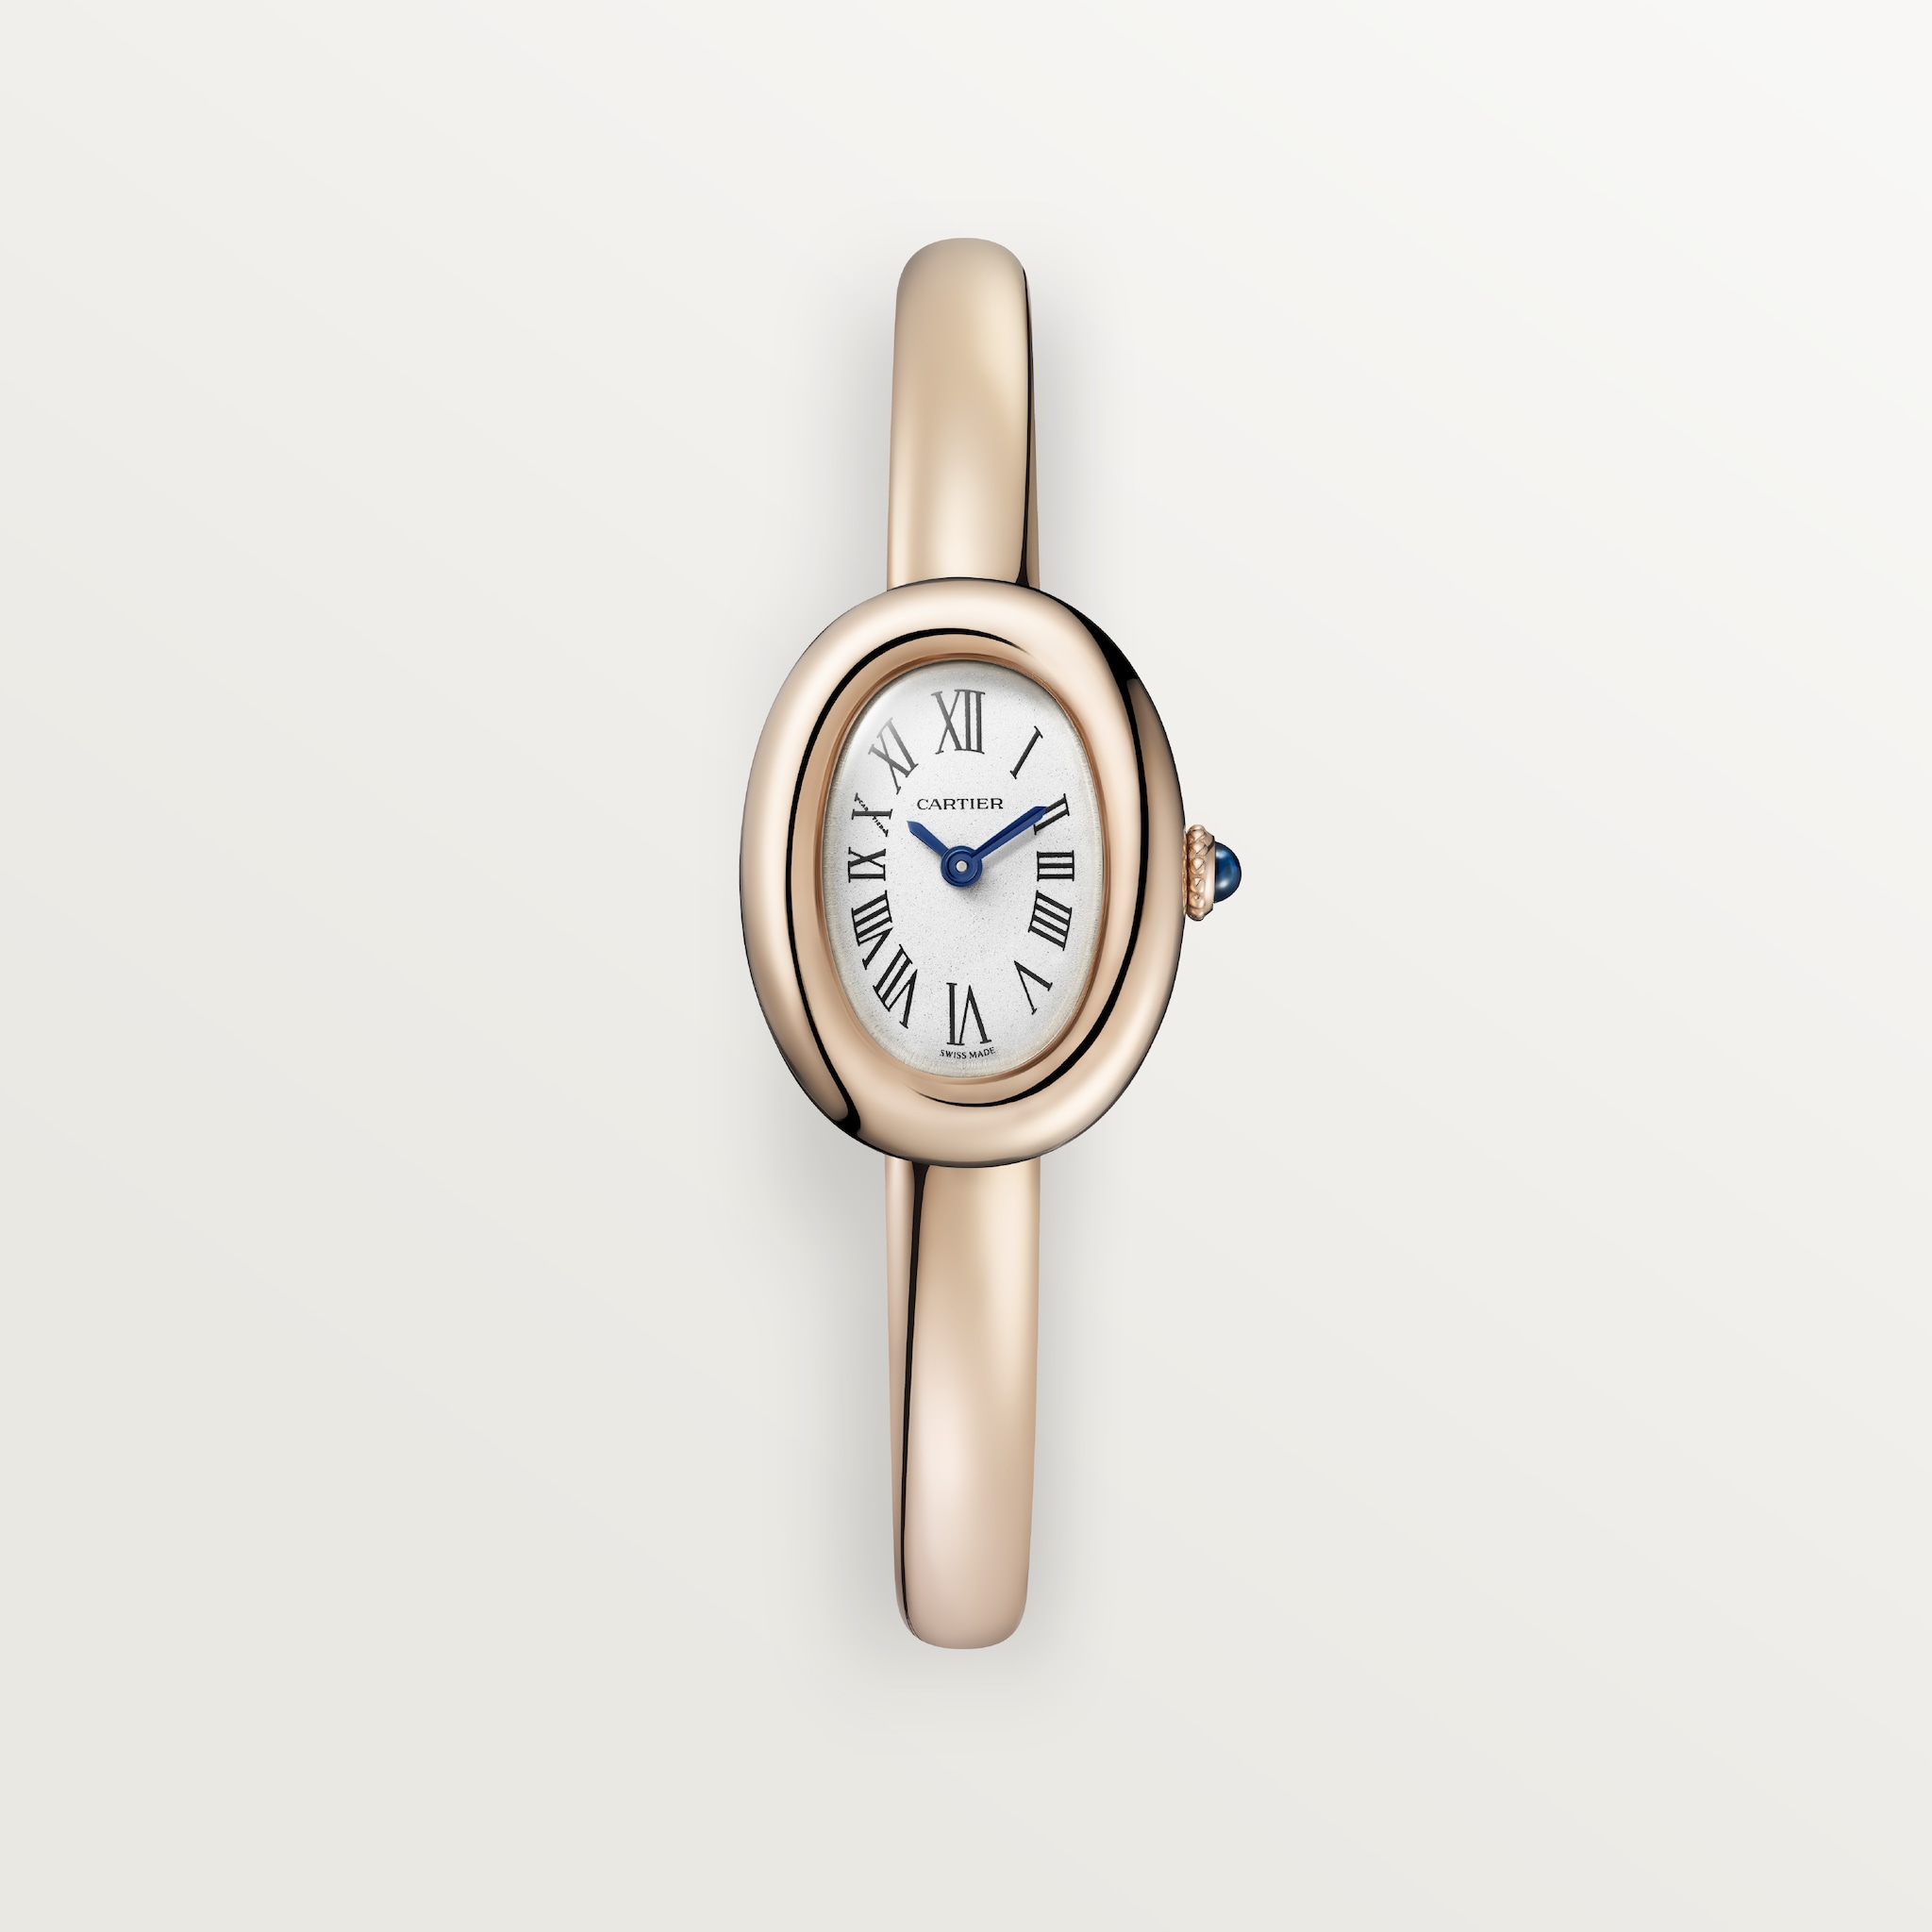 Baignoire watch (Size 15)Mini model, quartz movement, rose gold